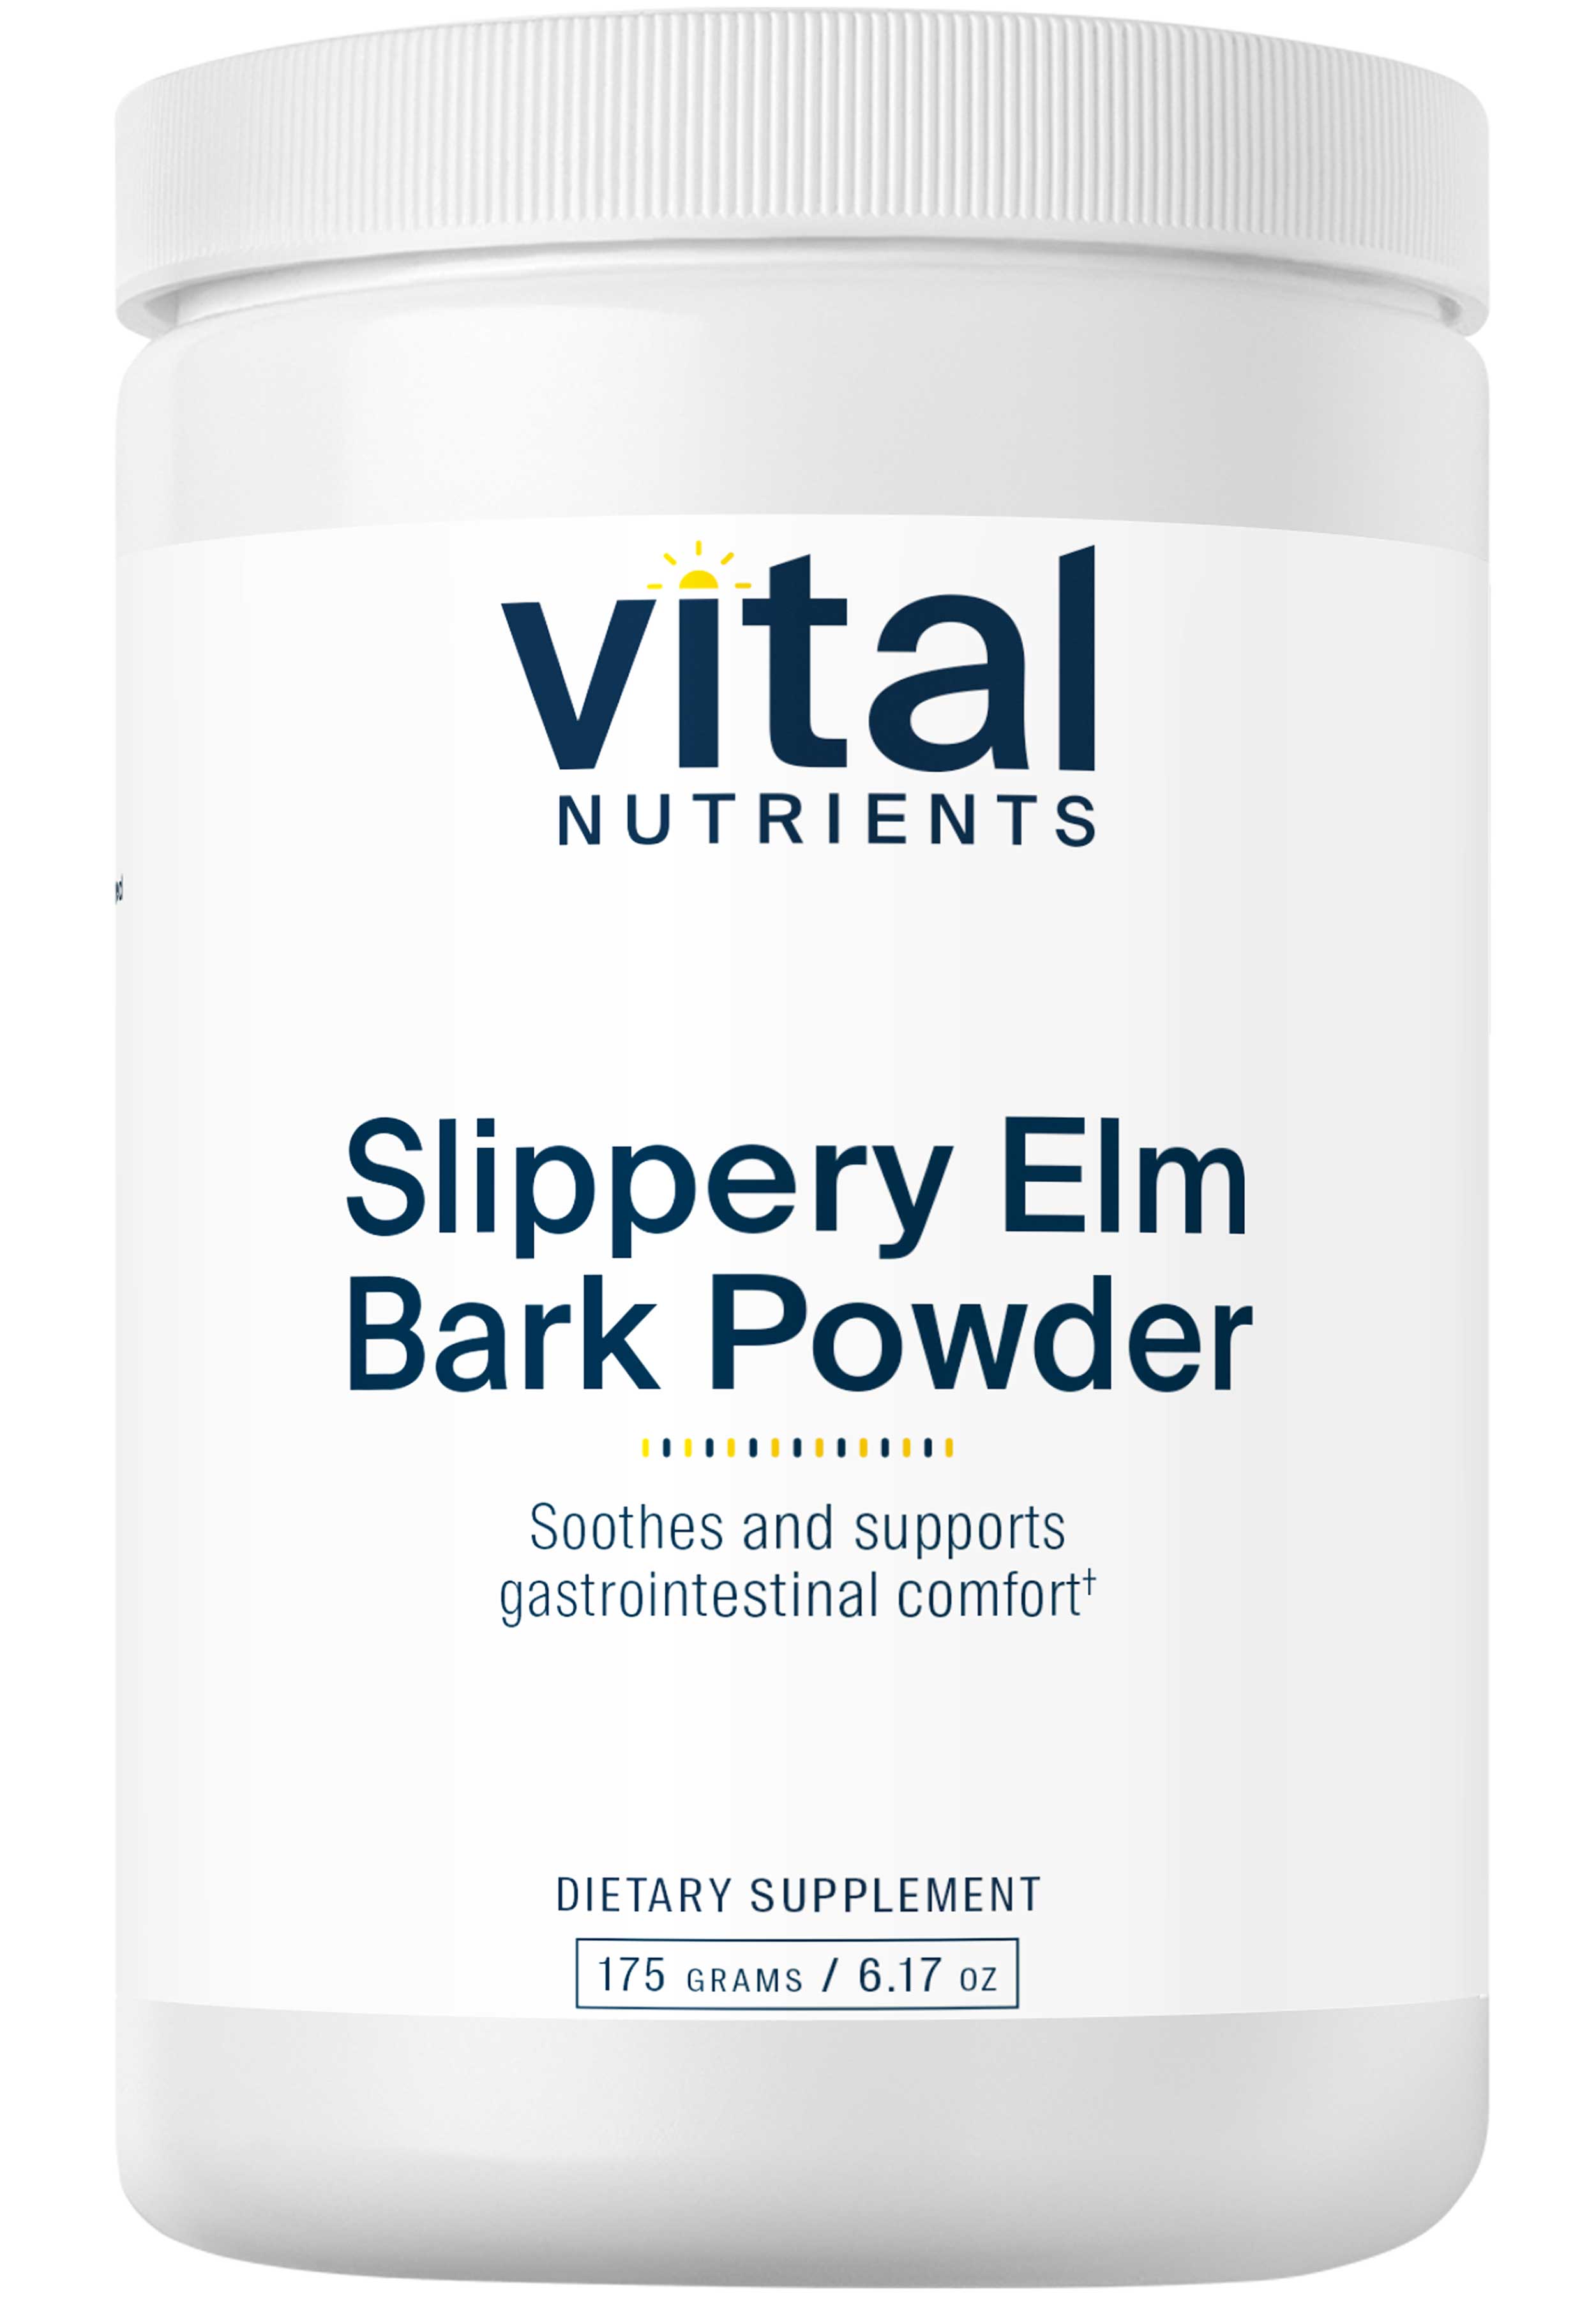 Vital Nutrients Slippery Elm Bark Powder